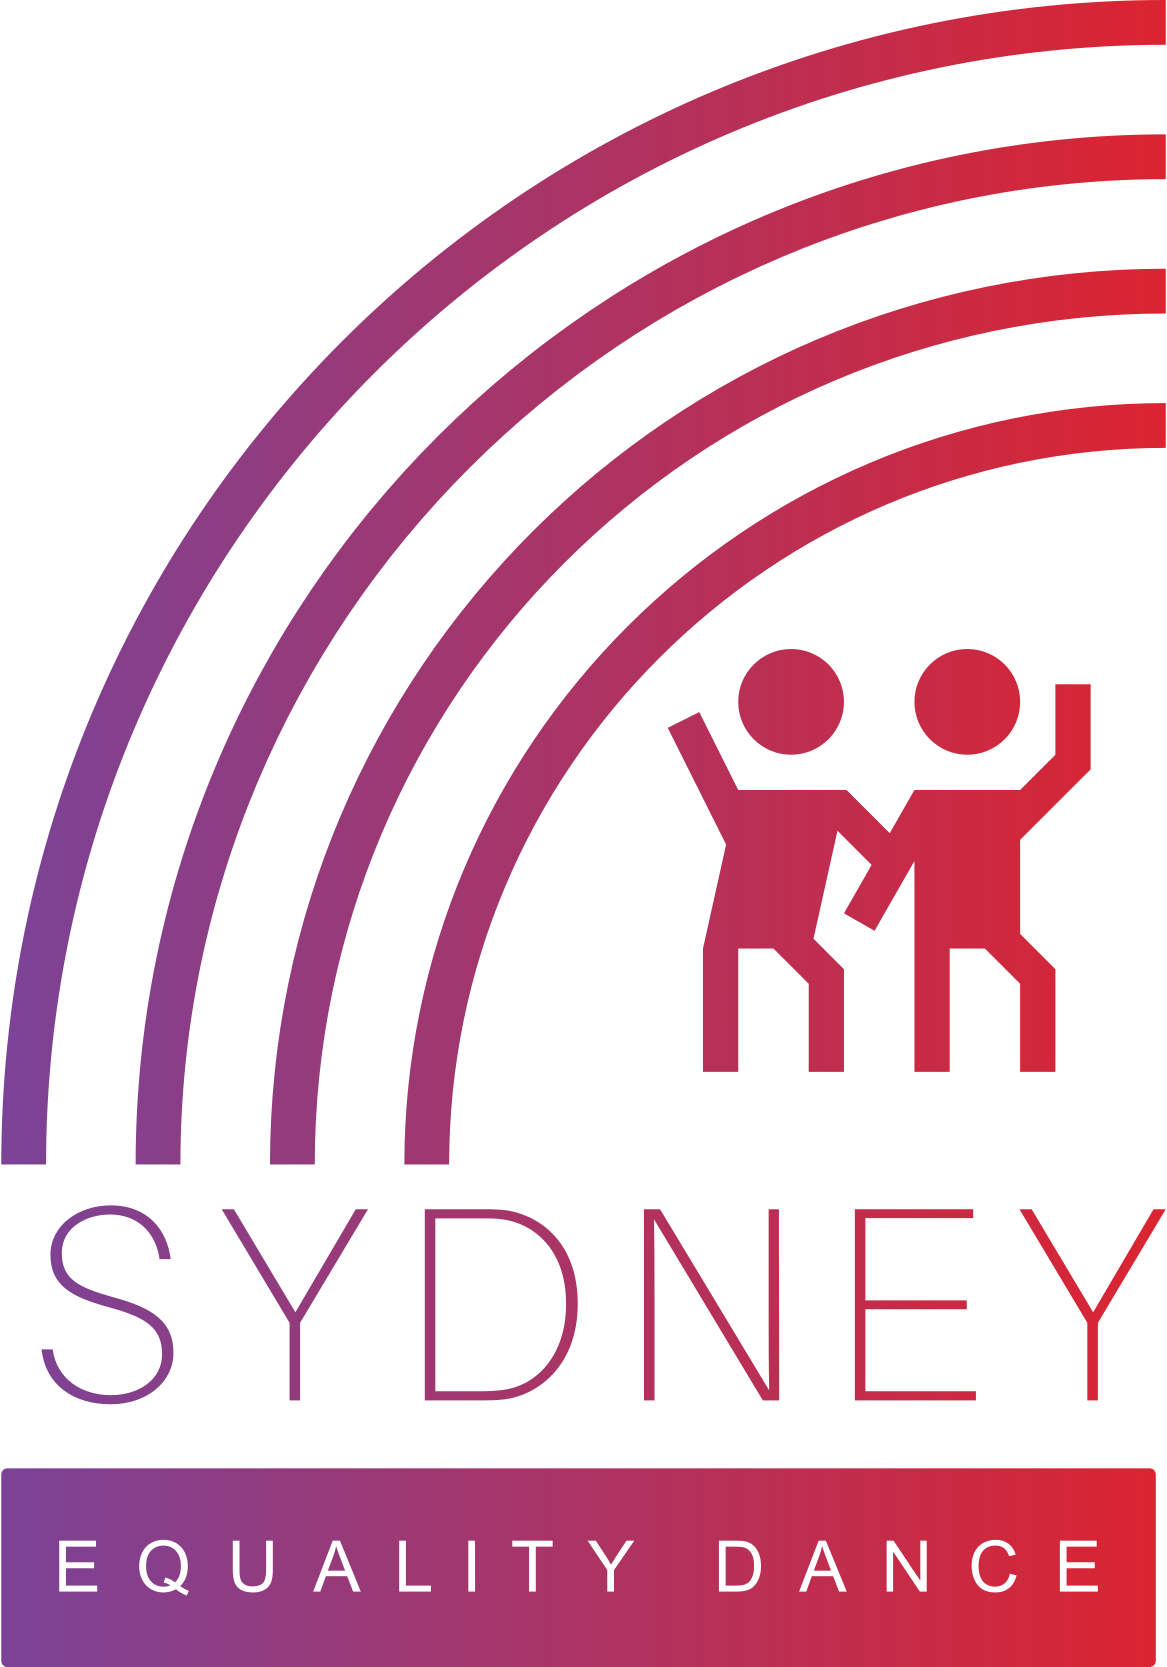 Sydney Equality Dance